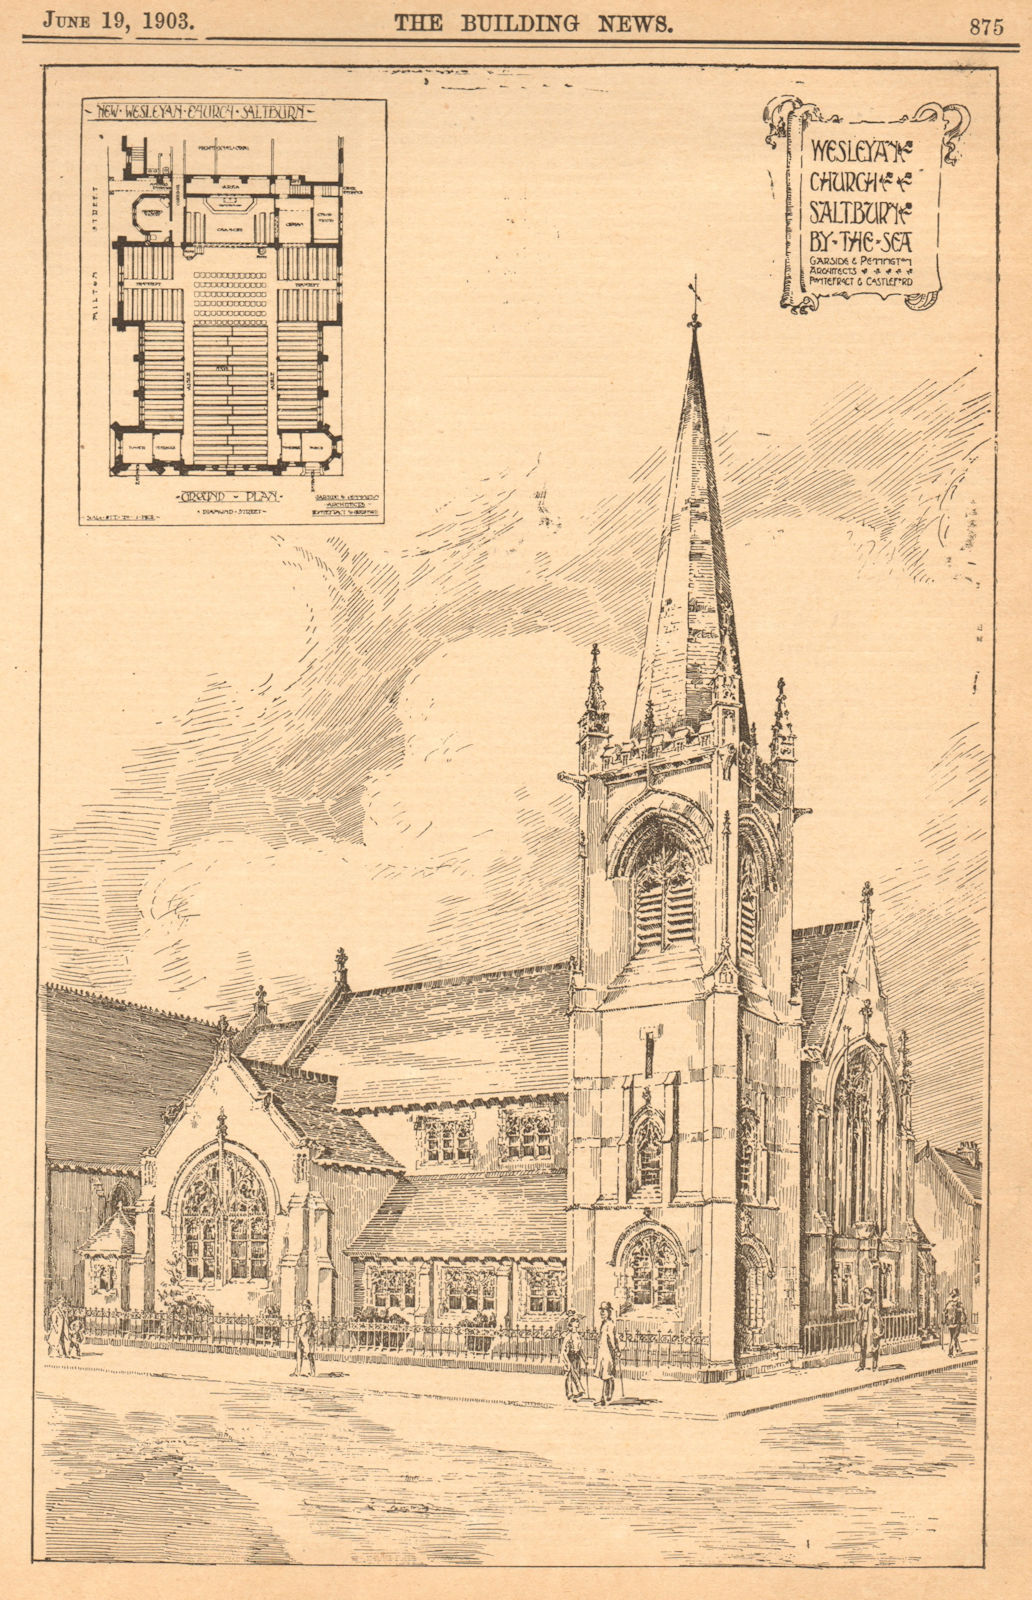 Methodist/Wesleyan church, Saltburn by the Sea, Garside & Pennington Archt 1903